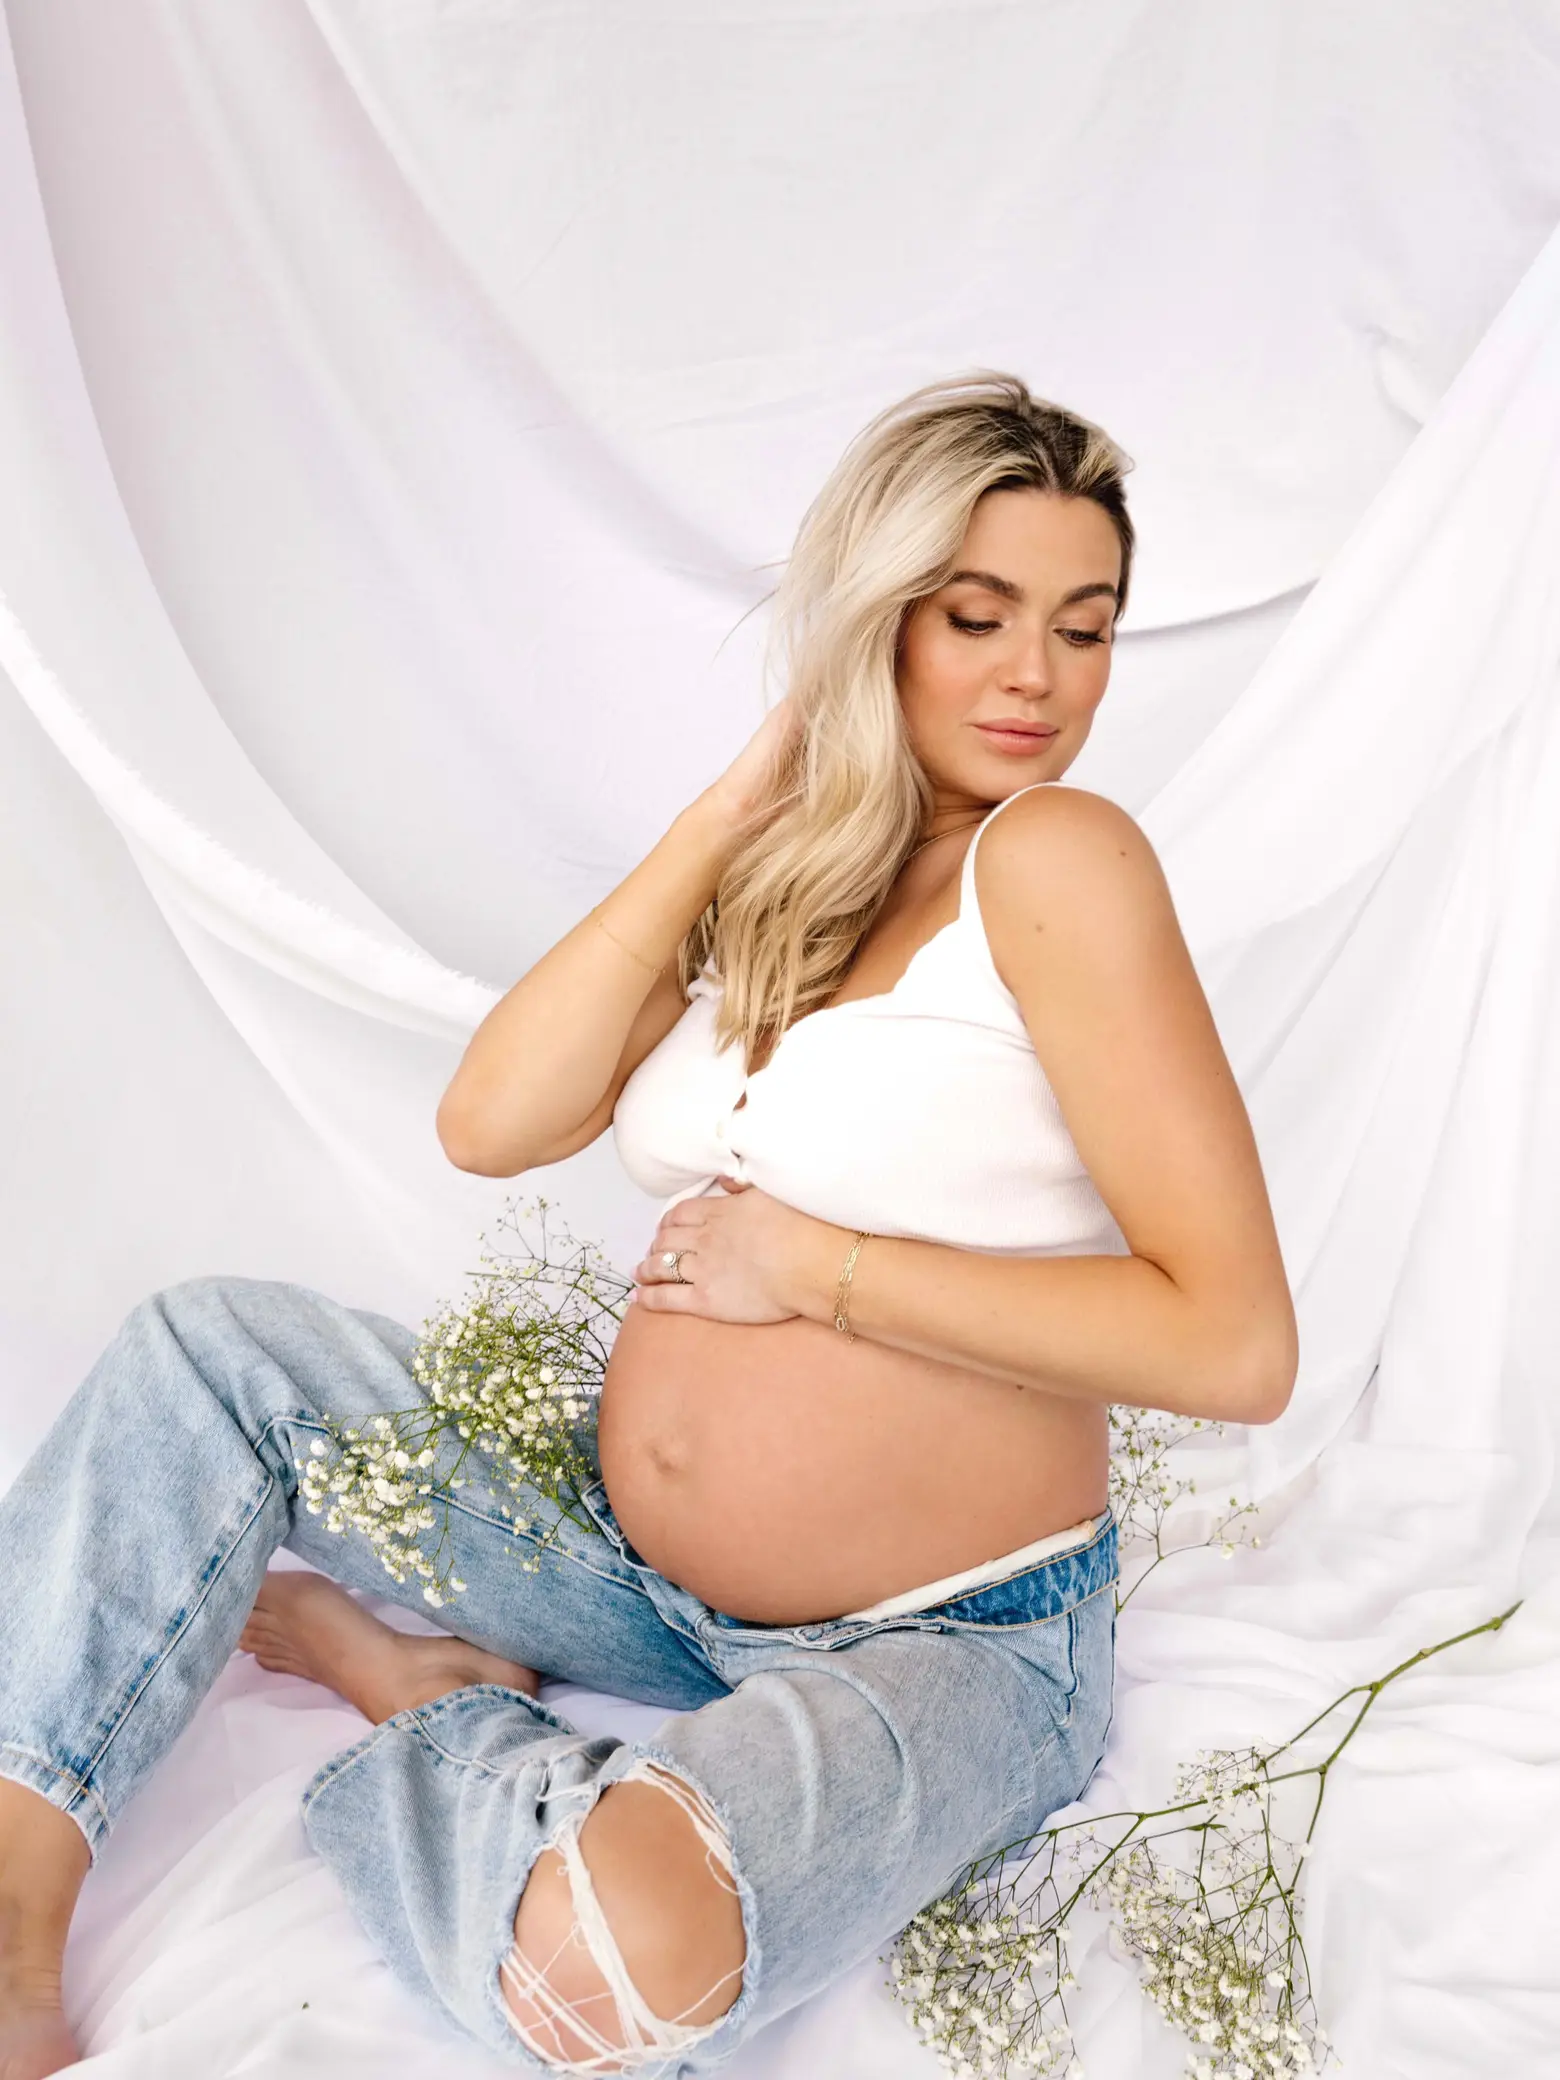 Lindsay Arnold's Baby Bump Album: Pregnancy Pics